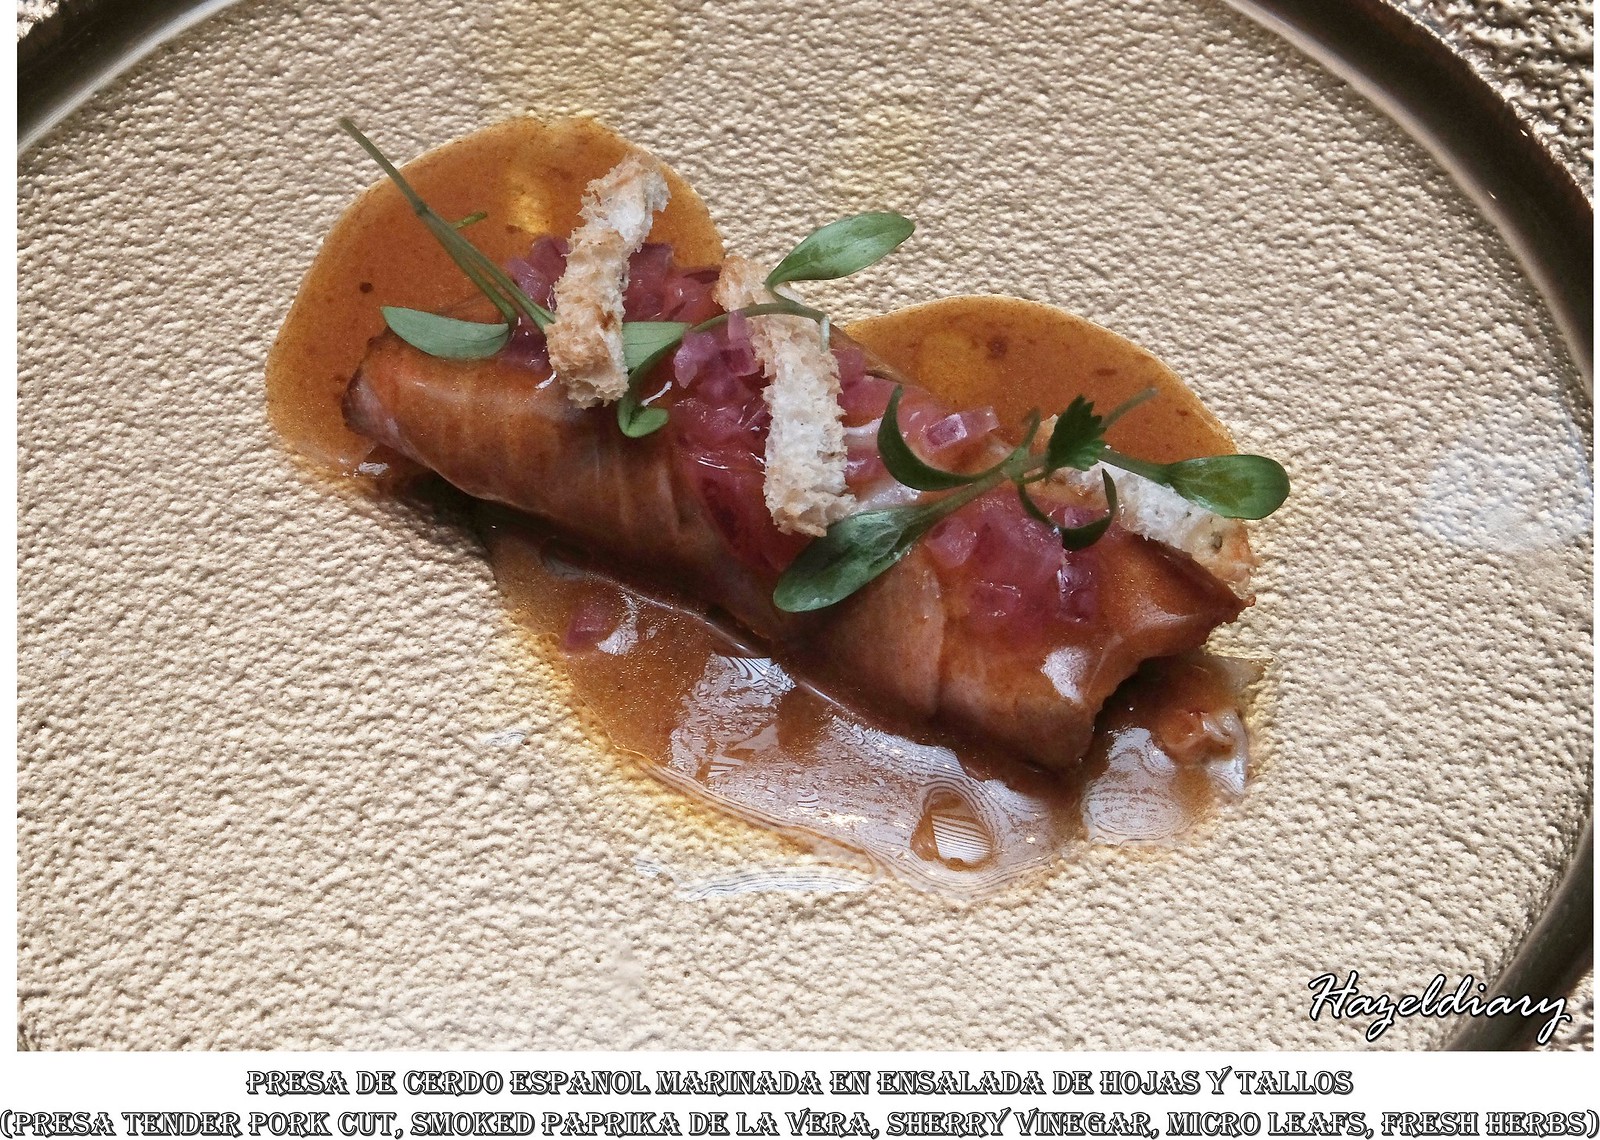 Capella The Knolls-Spanish Gourmet-Pork-Hazeldiary-1